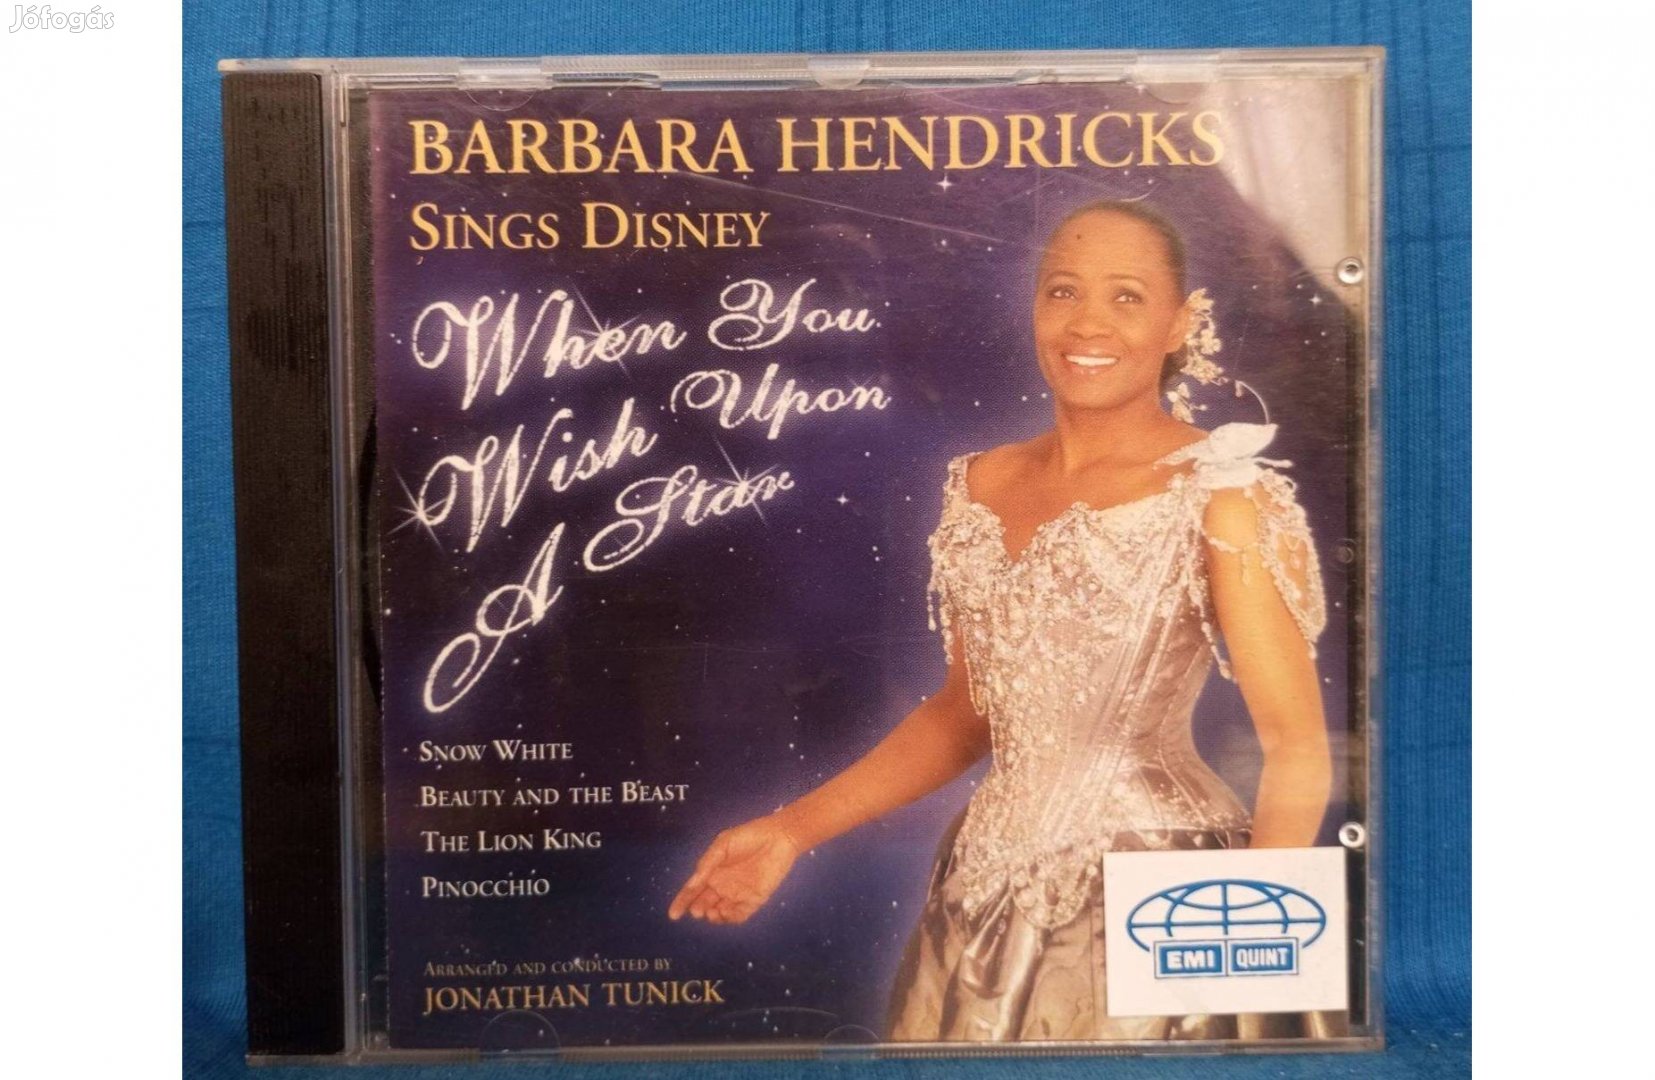 Barbara Hendricks - Sings Disney CD